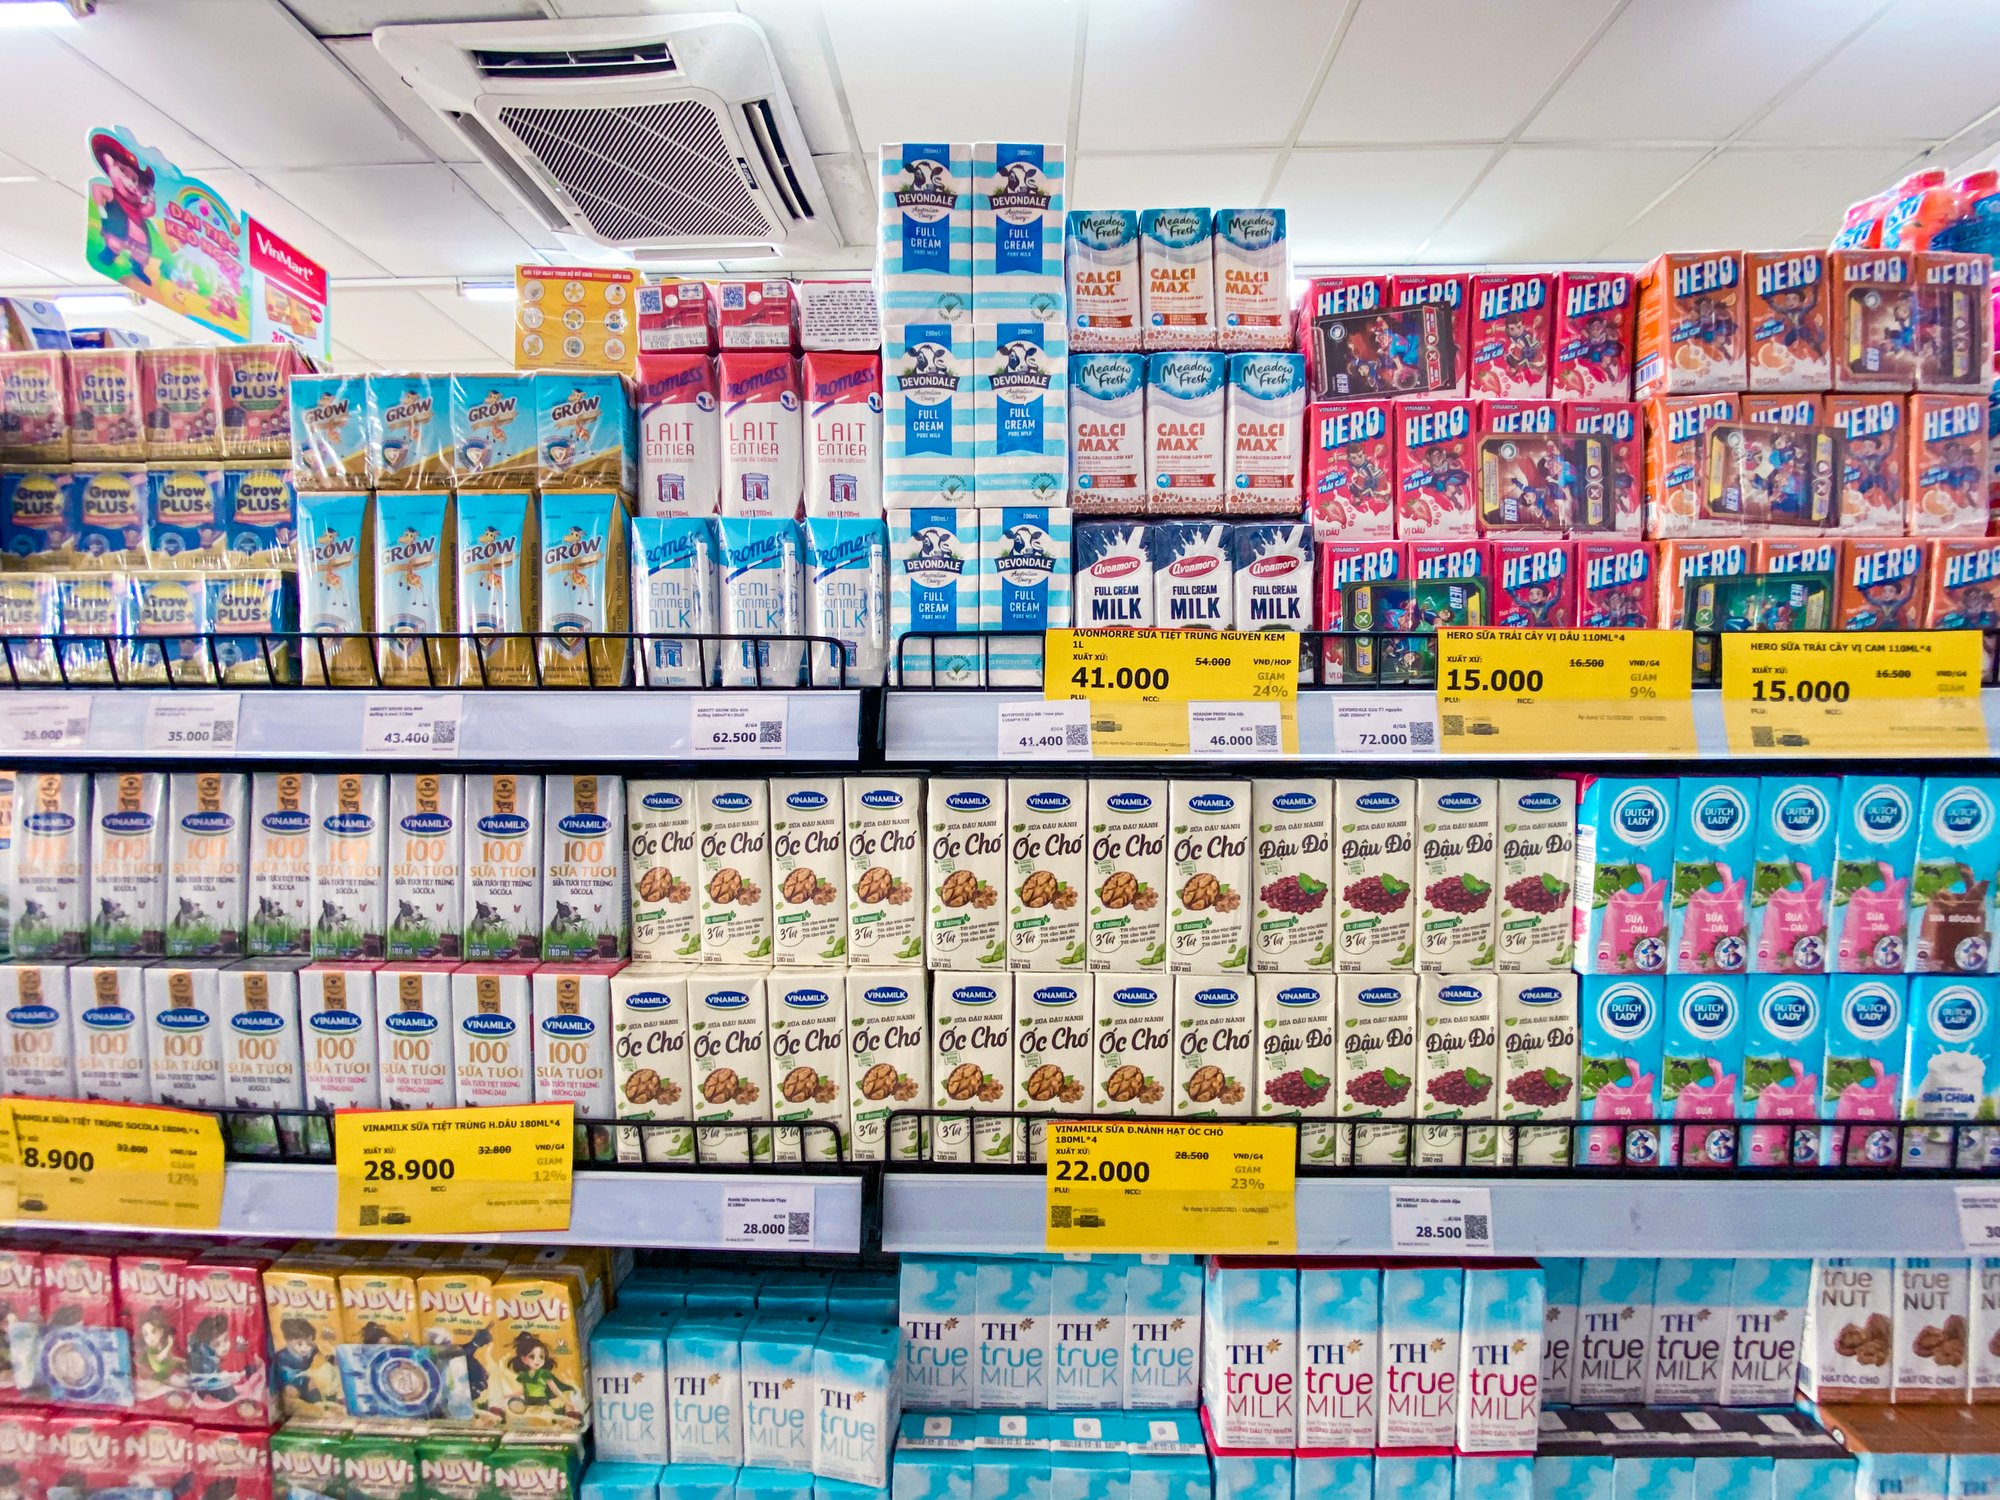 All milk brands on a shelf